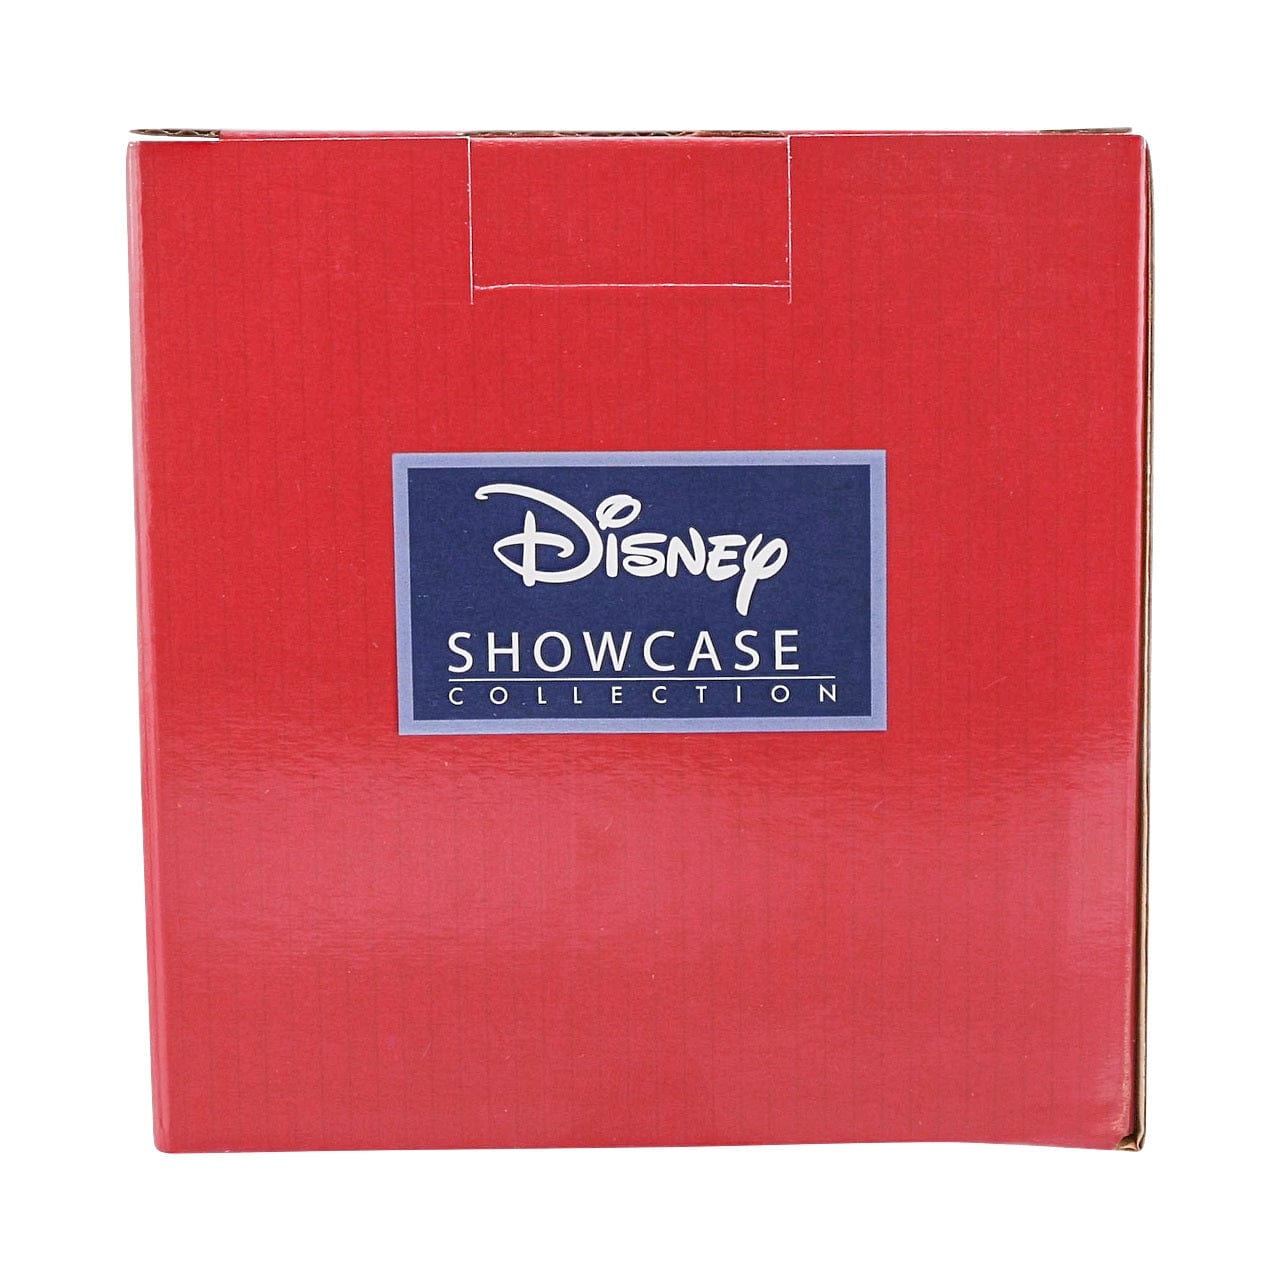 Enesco Disney Ornament Disney Traditions Figurine - Shamrock Wishes - St. Patrick's Minnie Mouse